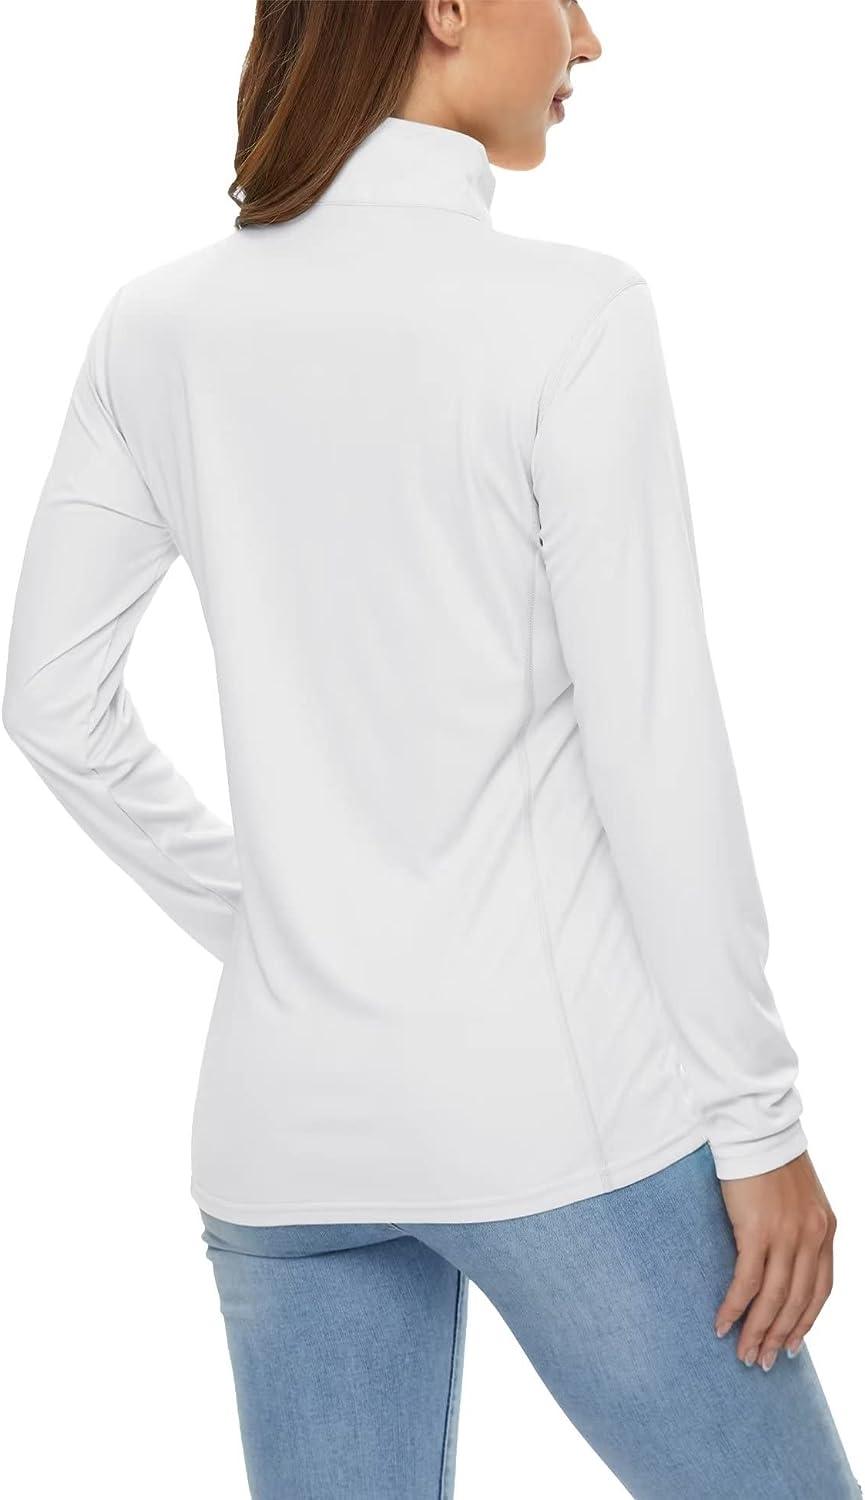 MAGCOMSEN Women's Shirts Long Sleeve 1/4 Zip UPF50+ UV Sun